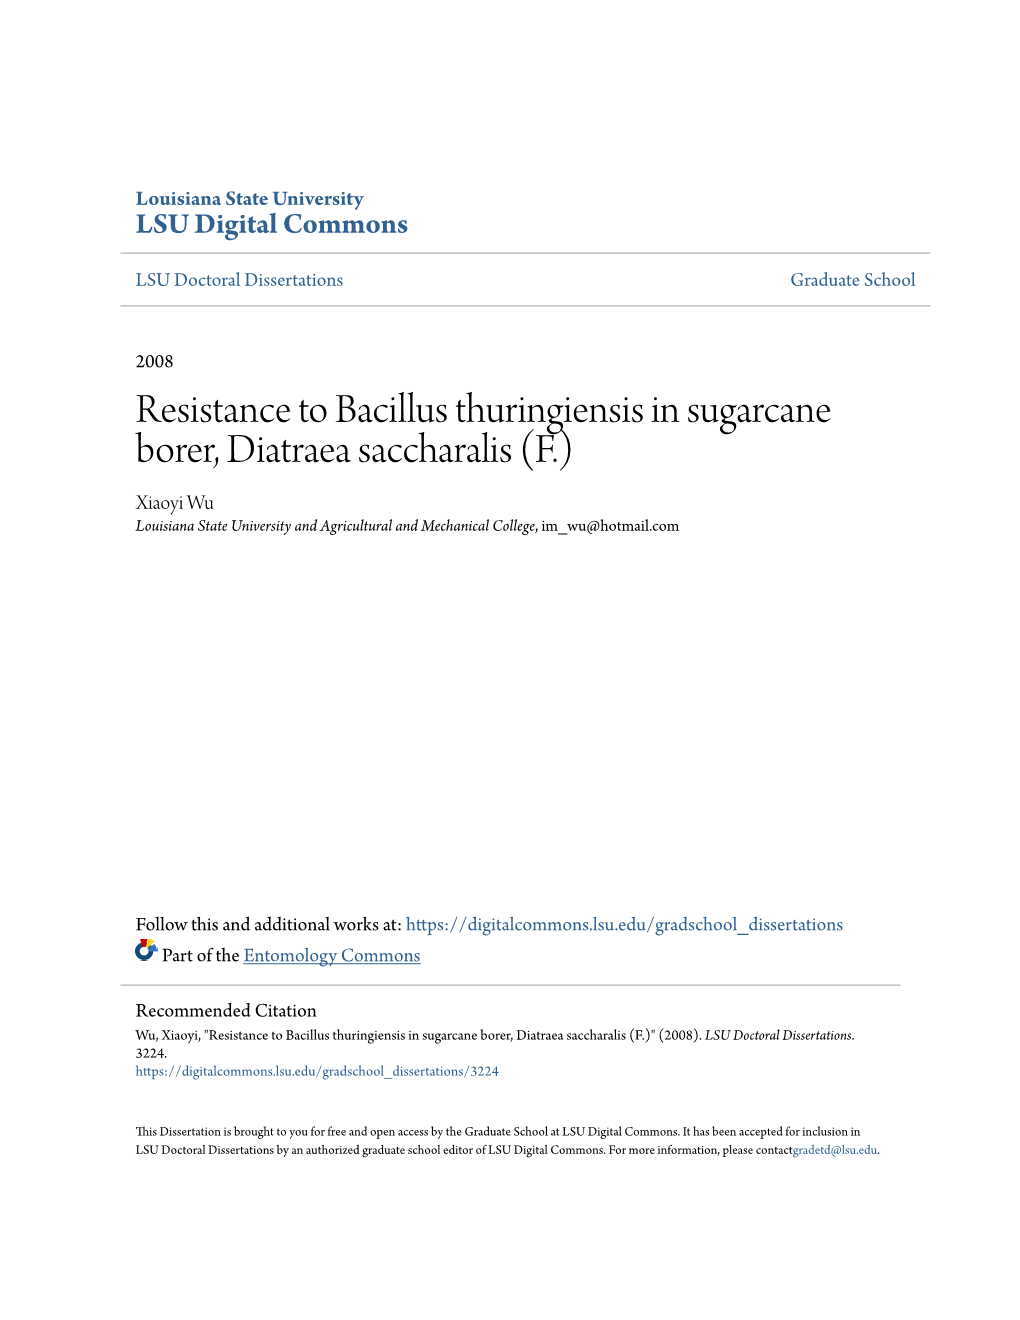 Resistance to Bacillus Thuringiensis in Sugarcane Borer, Diatraea